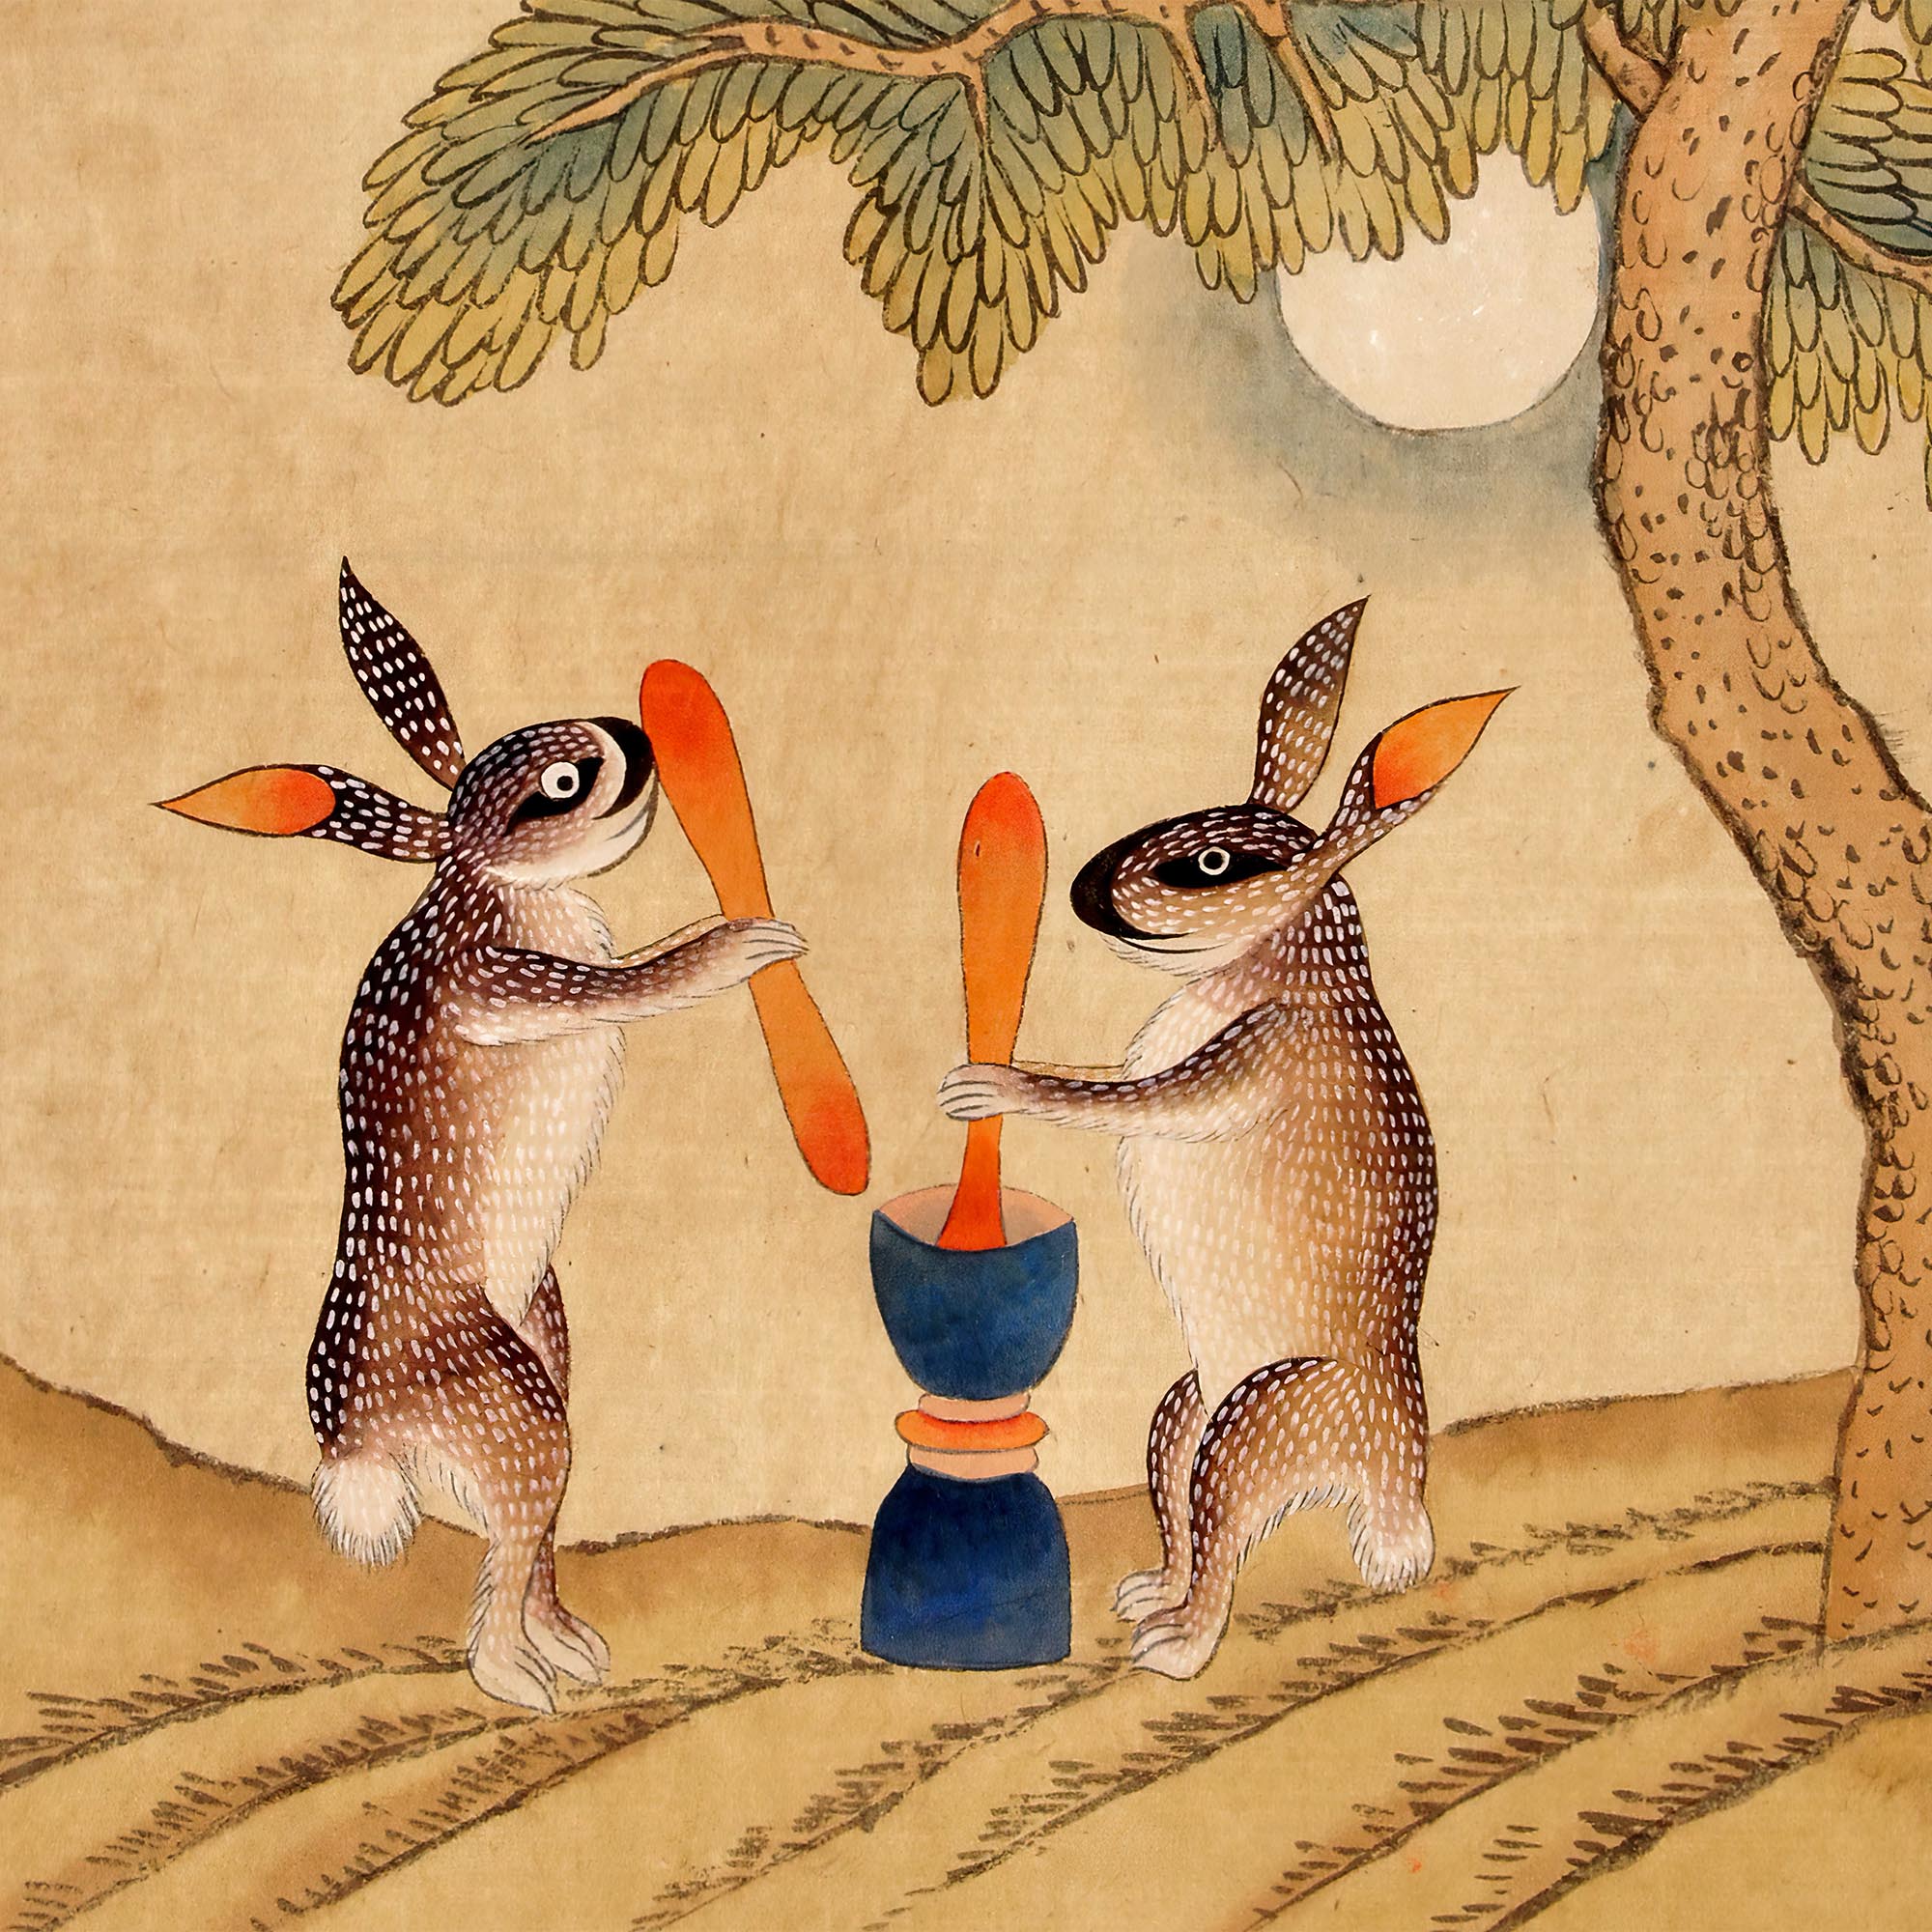 Fine art Minhwa Bunny of Immortality, Staring at the Moon | Classic Korean Mythology Folk Art | Cute Kawaii Rabbit Pet Lover Framed Art Print